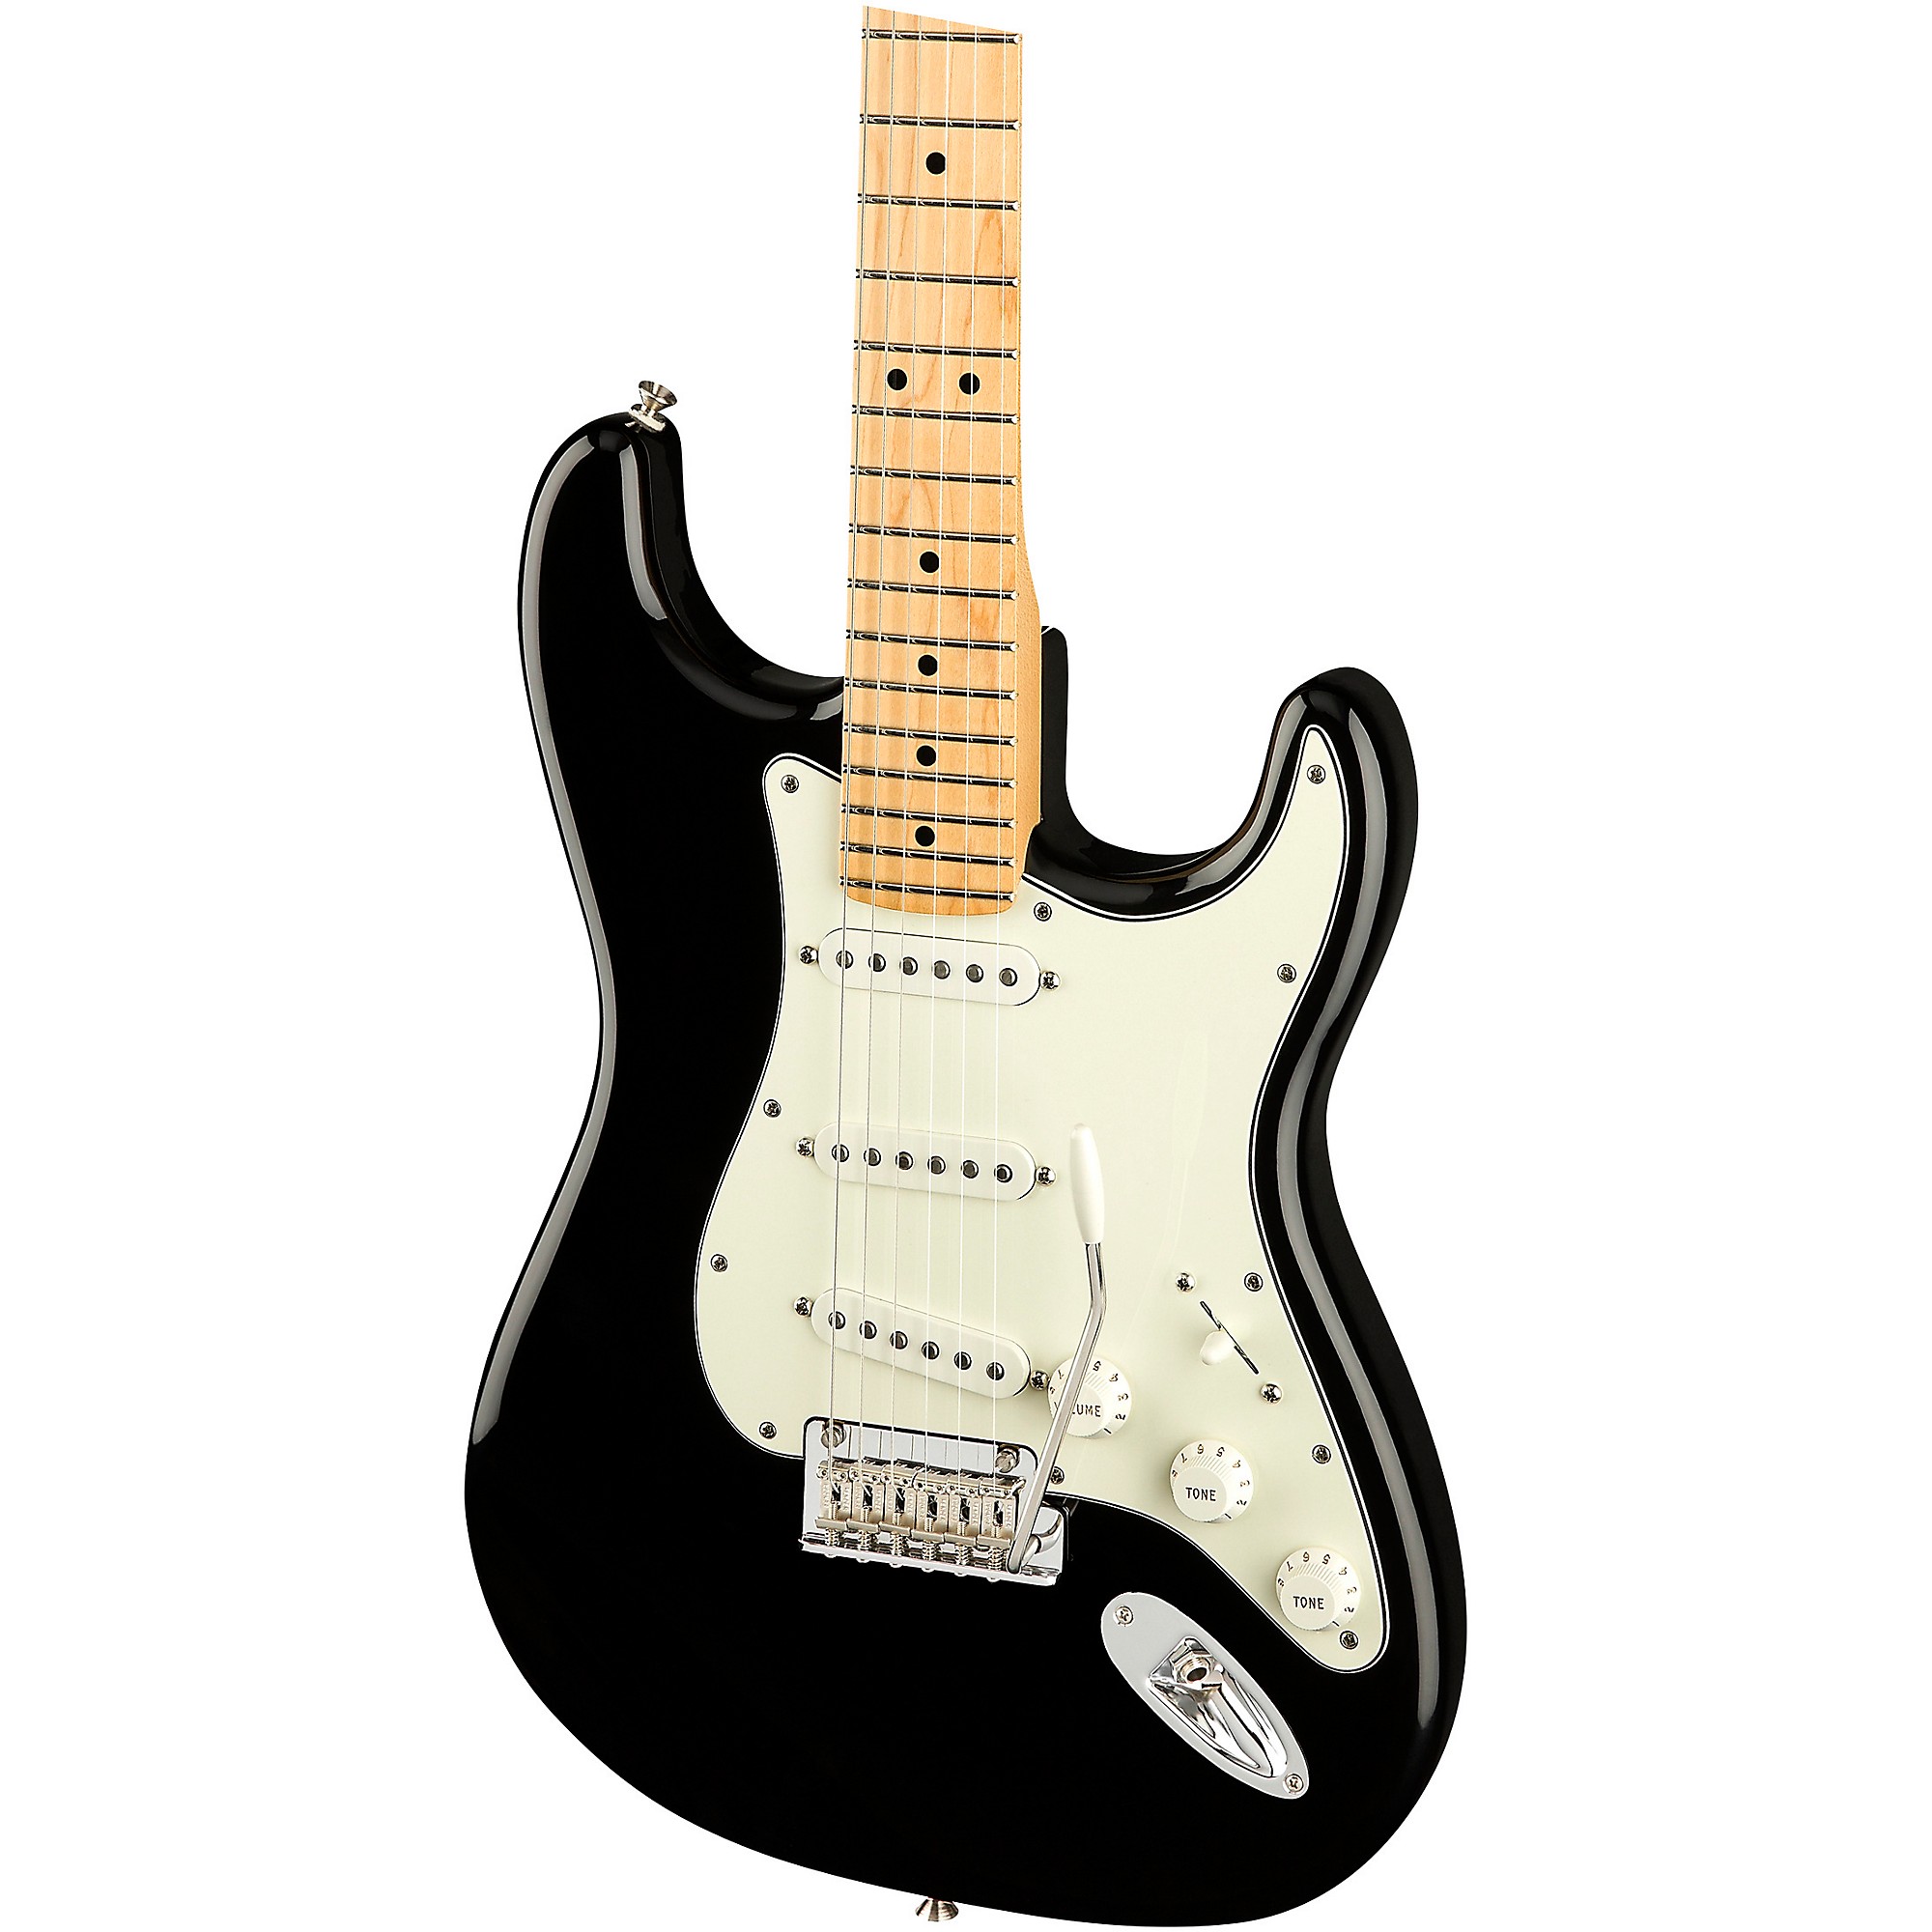 Eckroth Music - Fender Player Stratocaster Electric Guitar Black